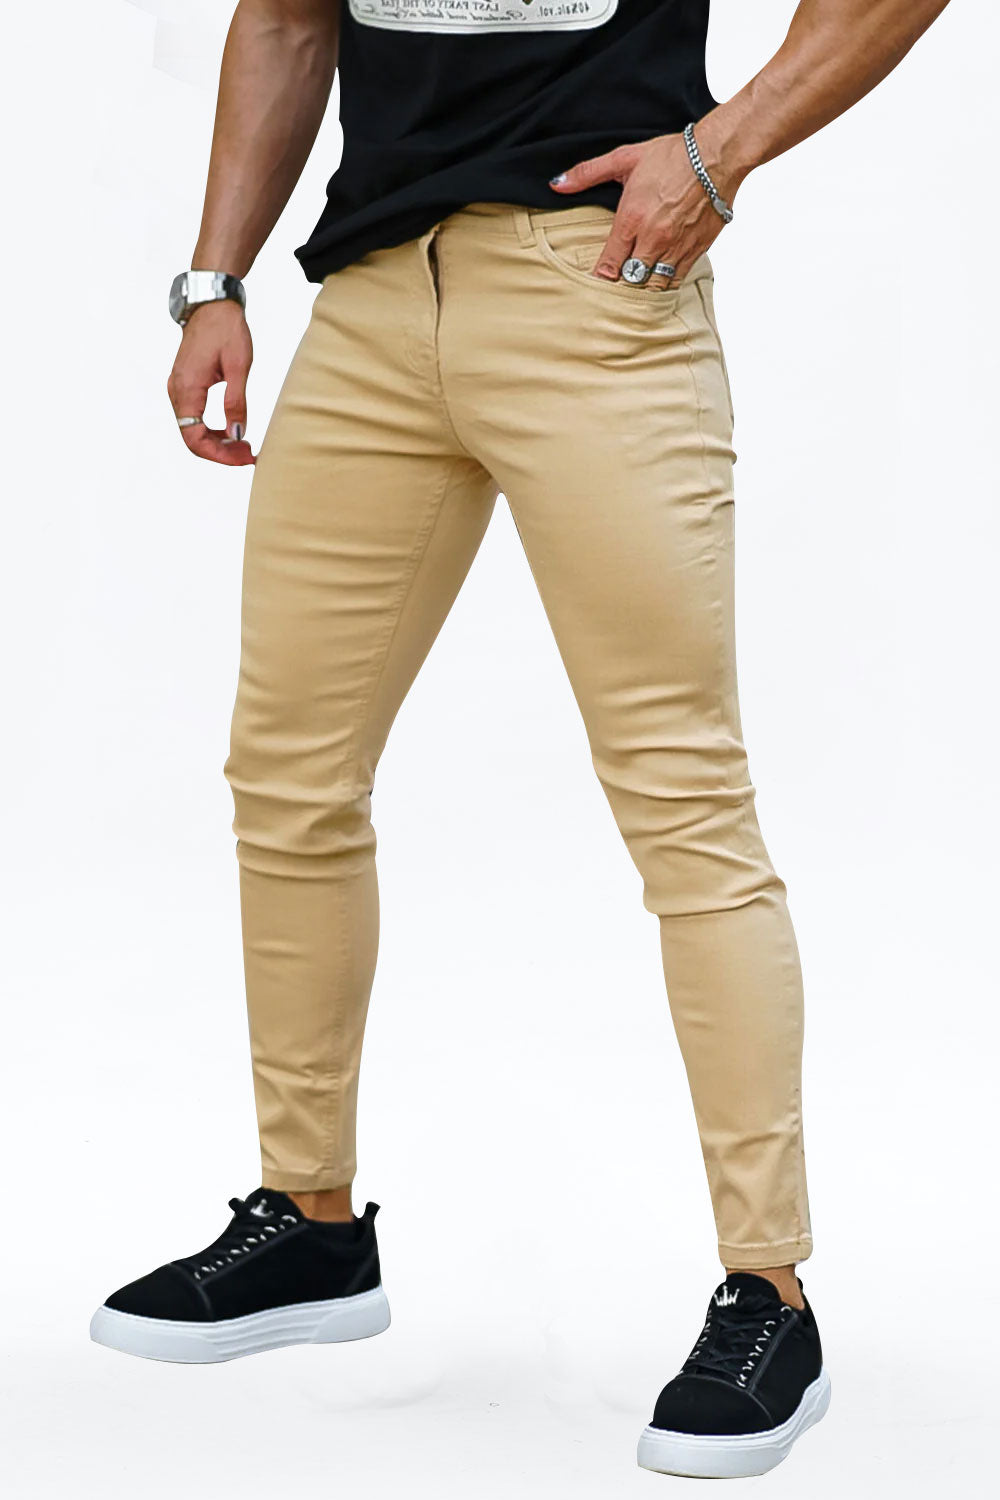 Gingtto Mens Trendy Jeans Skinny Stretch-Khaki Fashionable Jeans